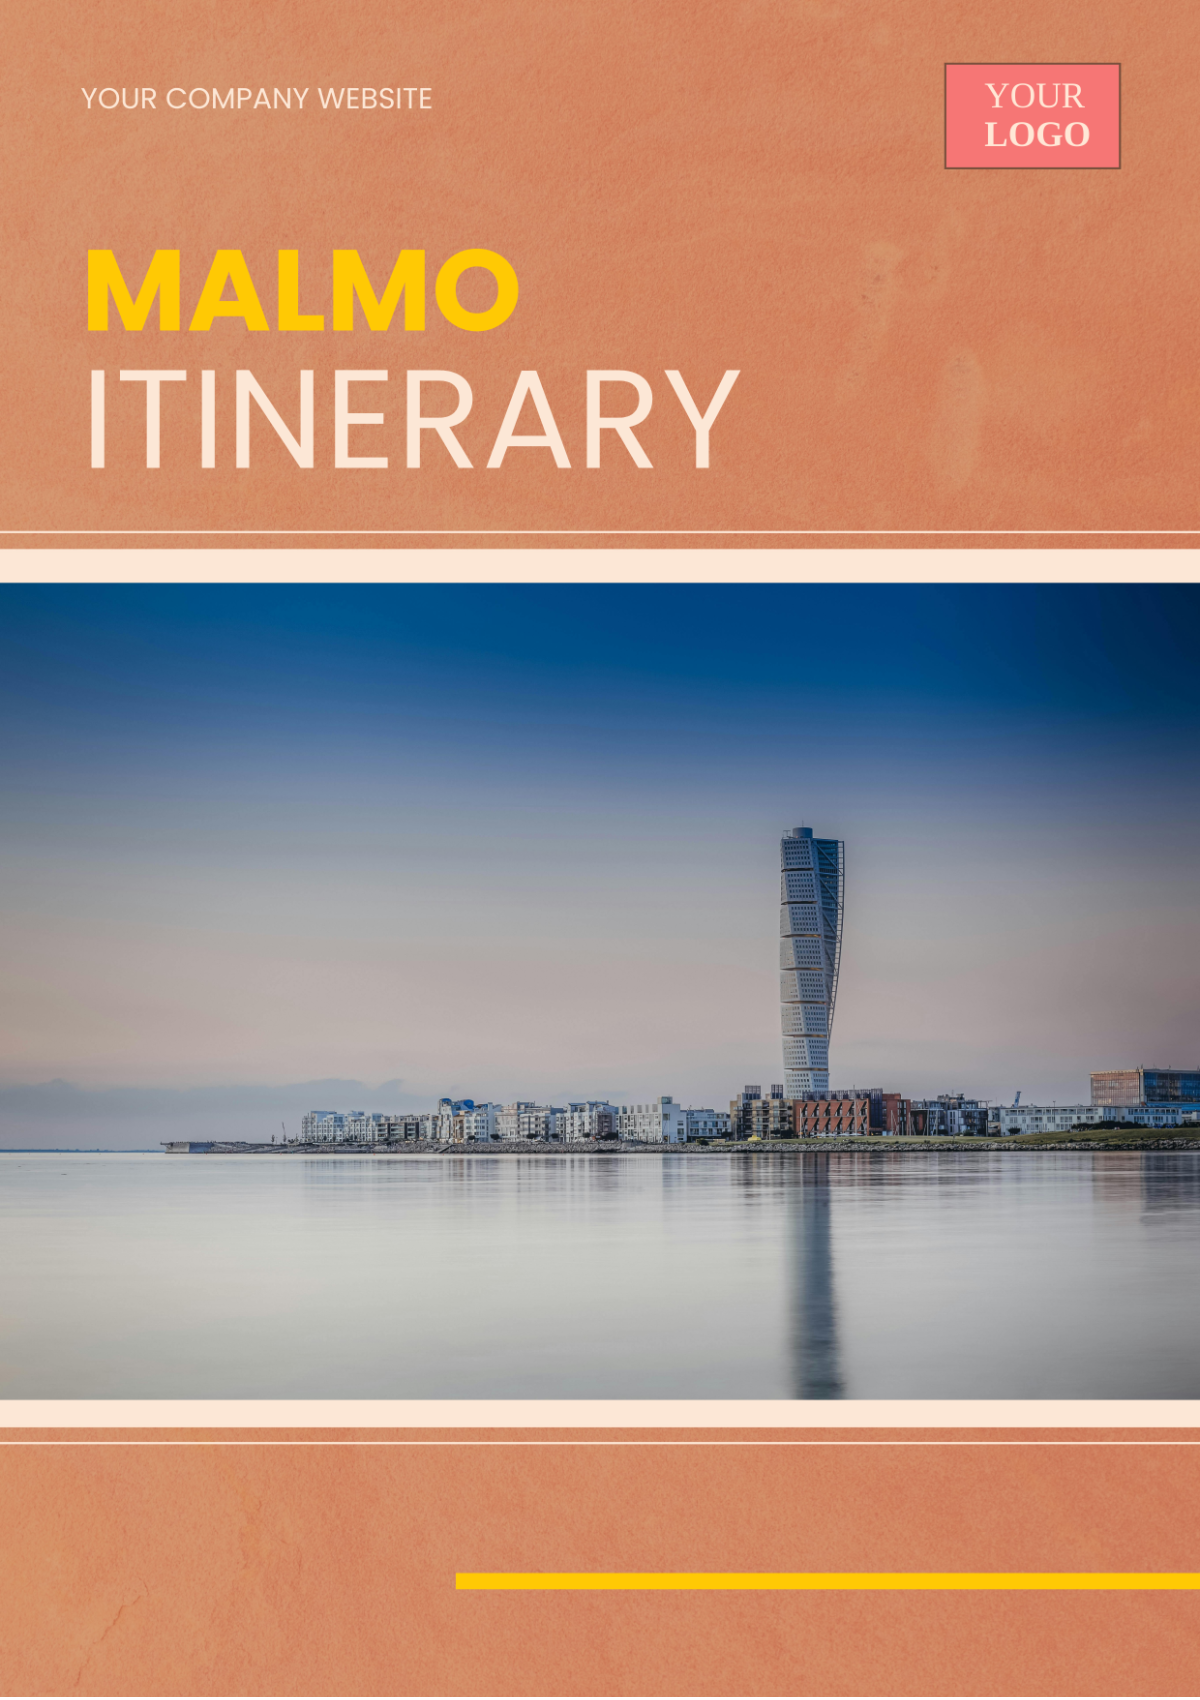 Malmo Itinerary Template